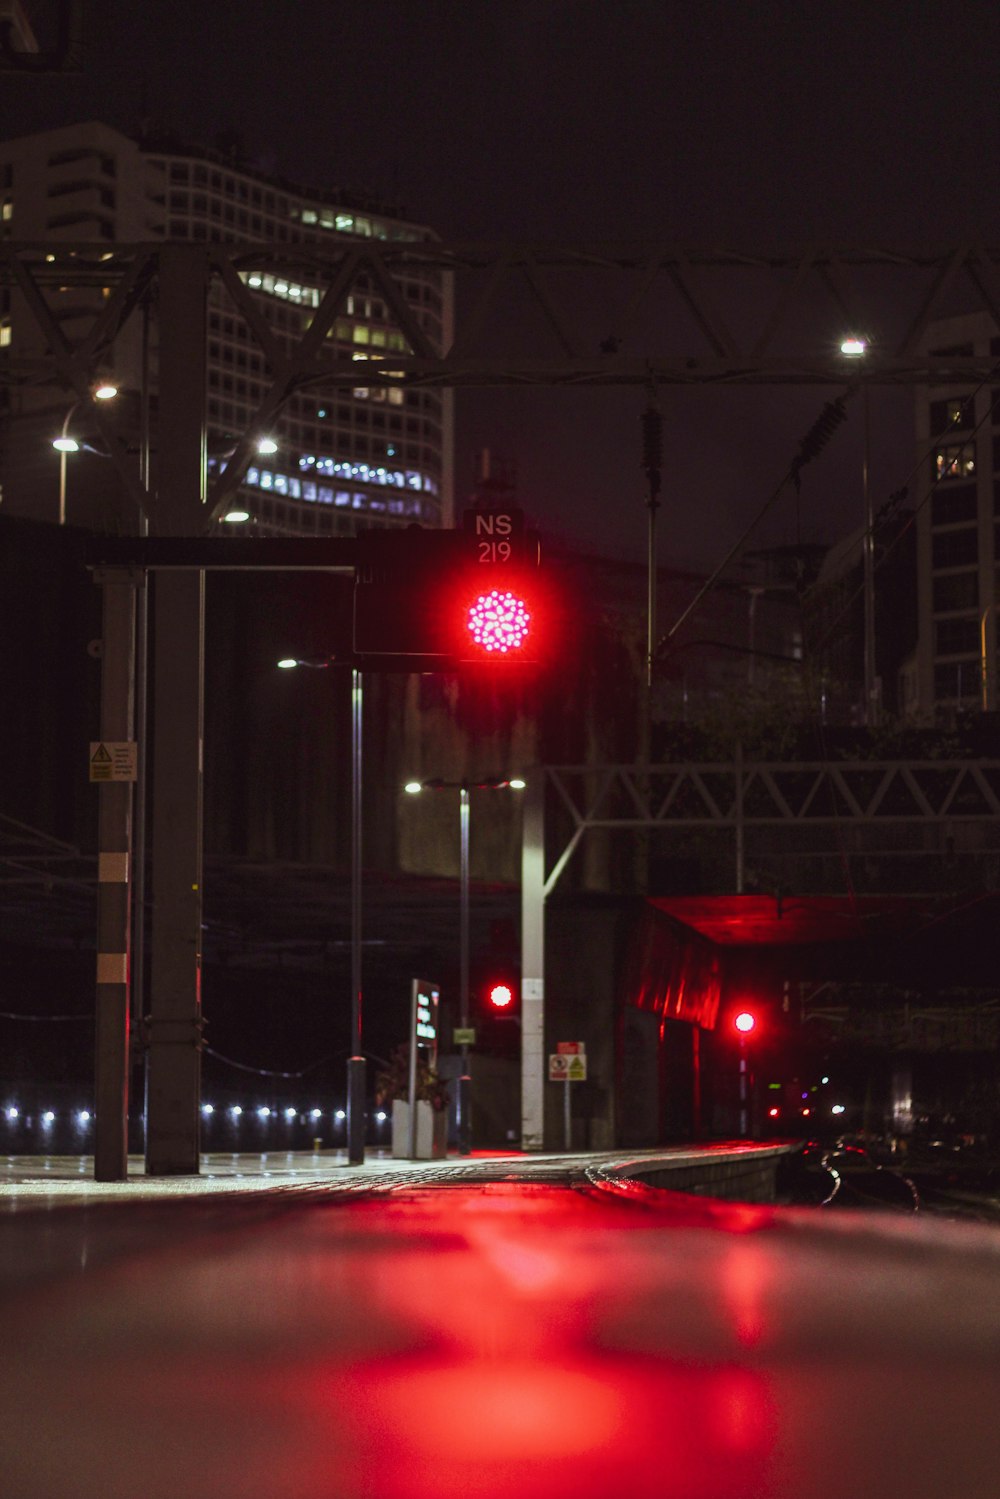 a stop light at night